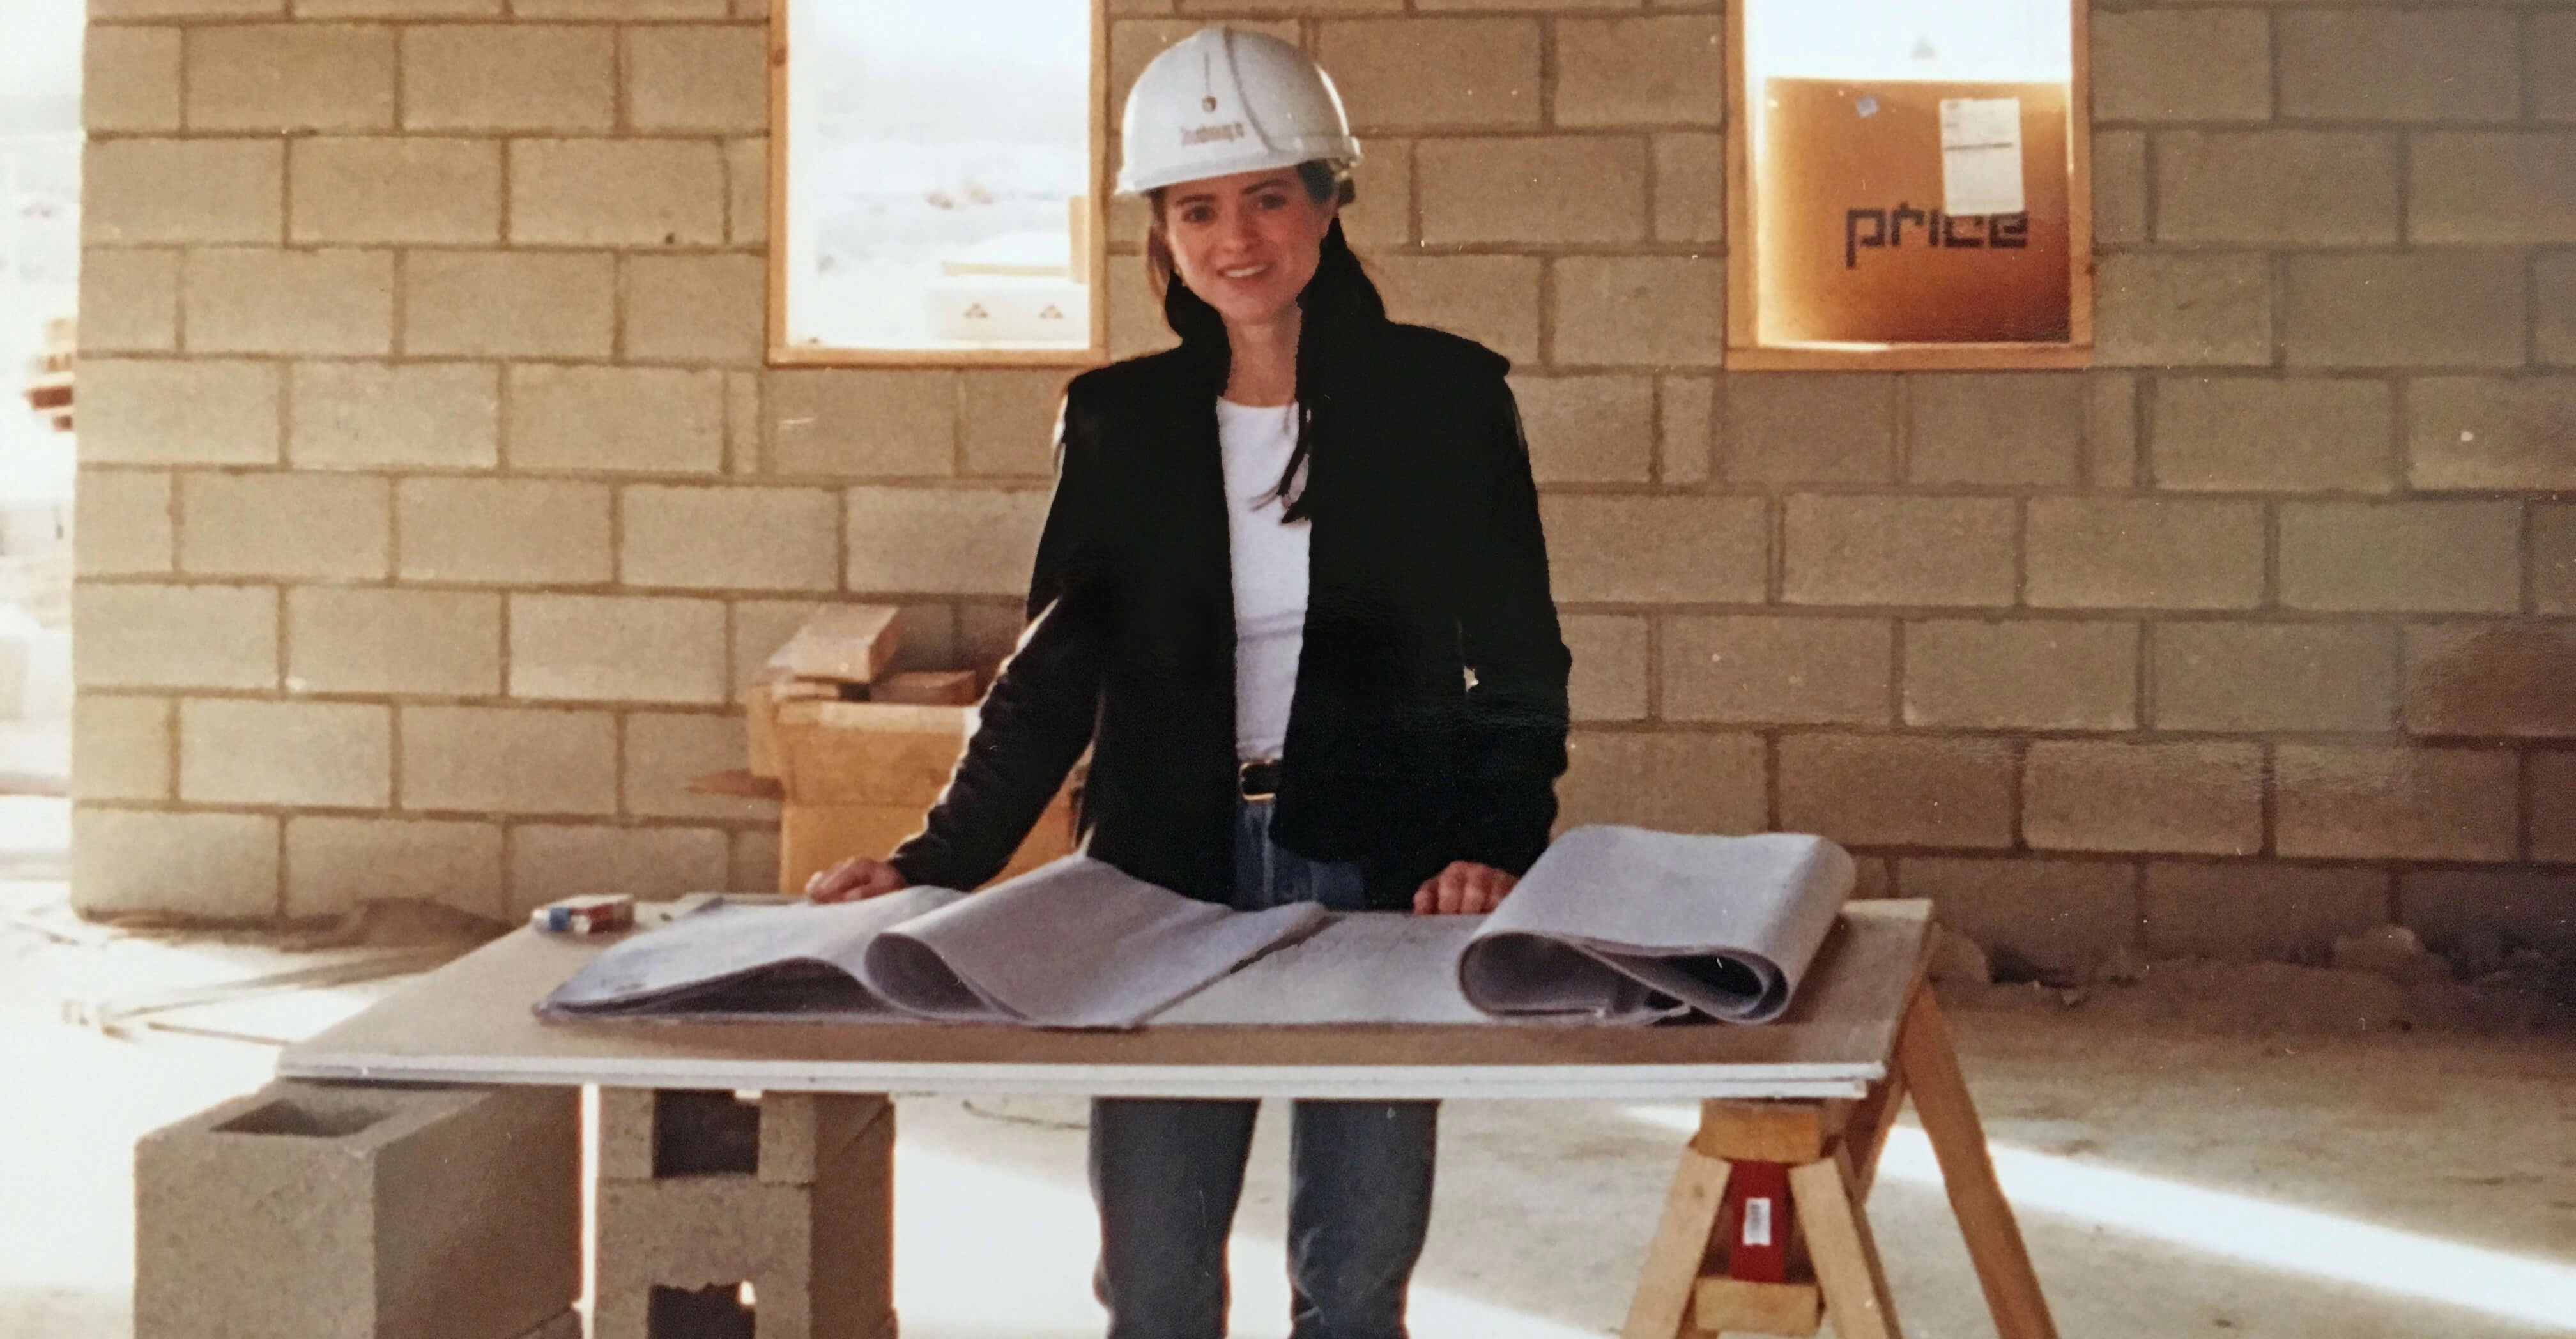 Employee Spotlight: Supporting Women in Construction 2